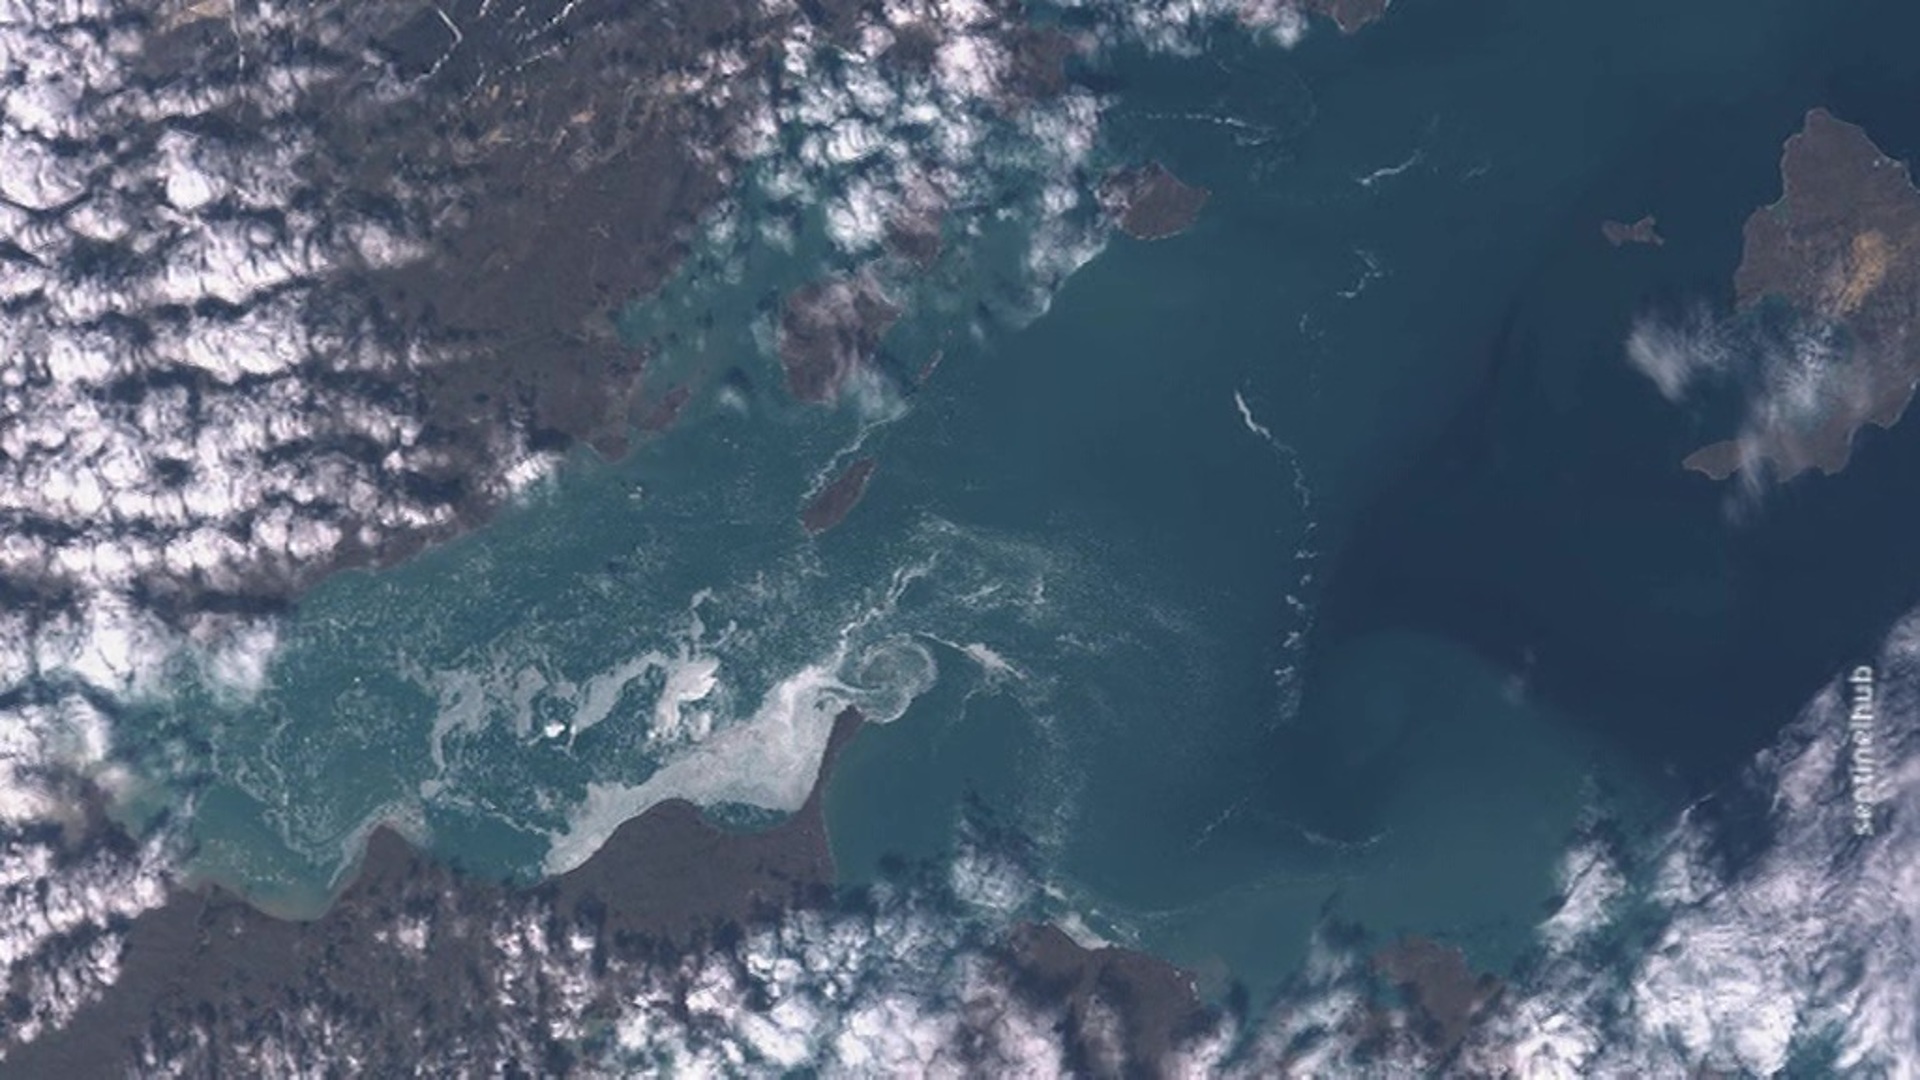 Хобитус фото снимки погоды из космоса